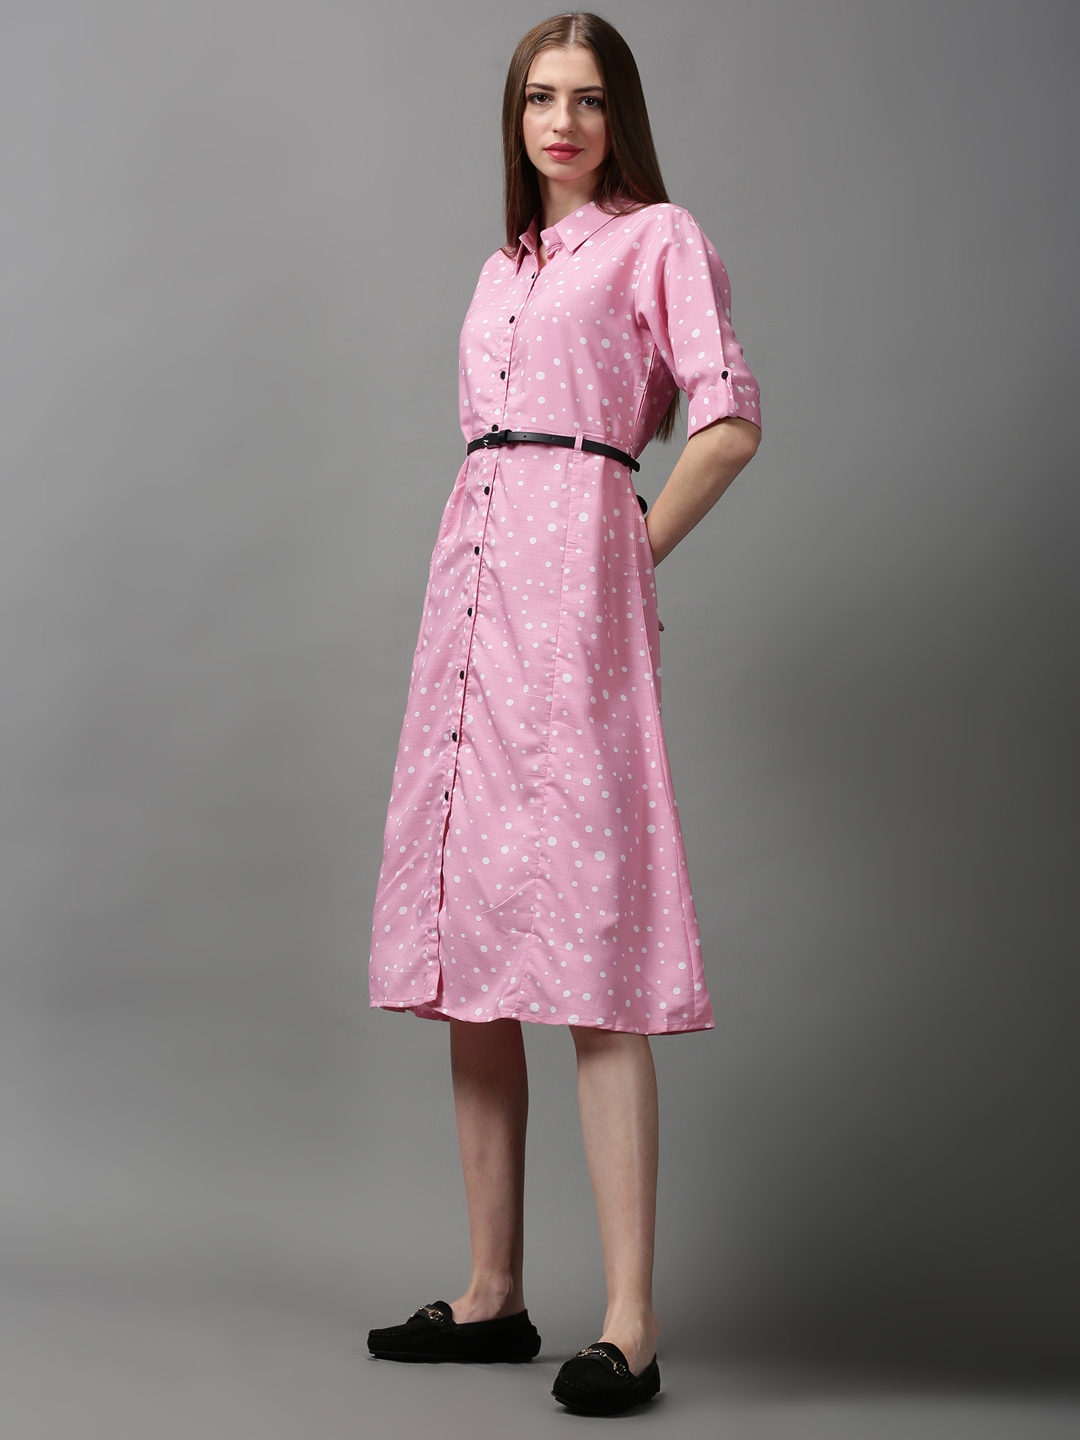 Women's Pink Cotton Printed Dresses